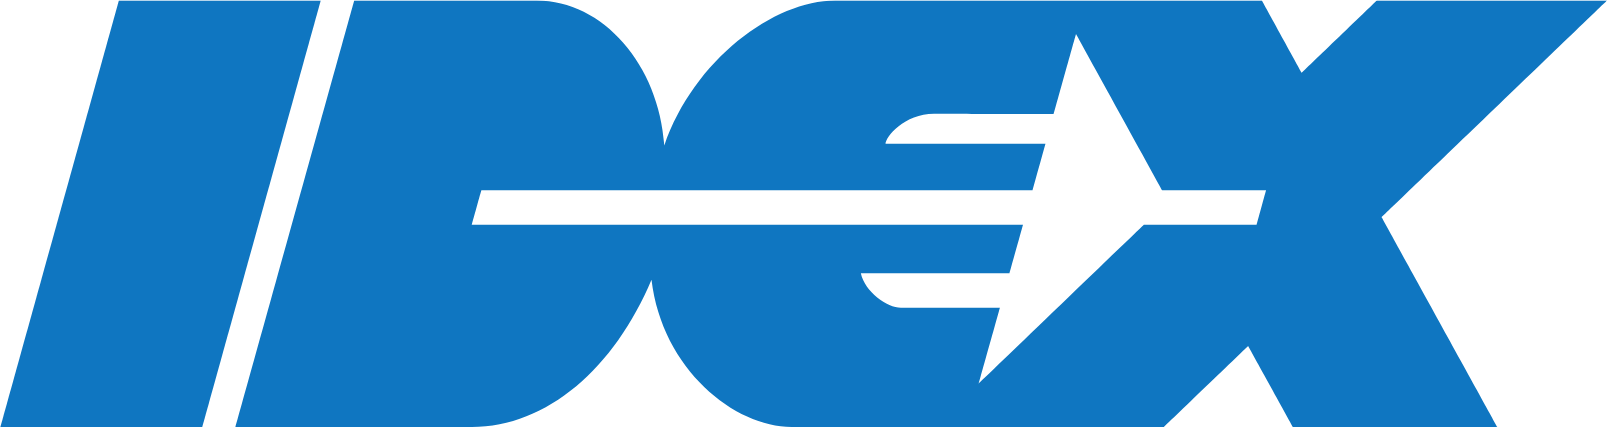 IDEX logo (transparent PNG)